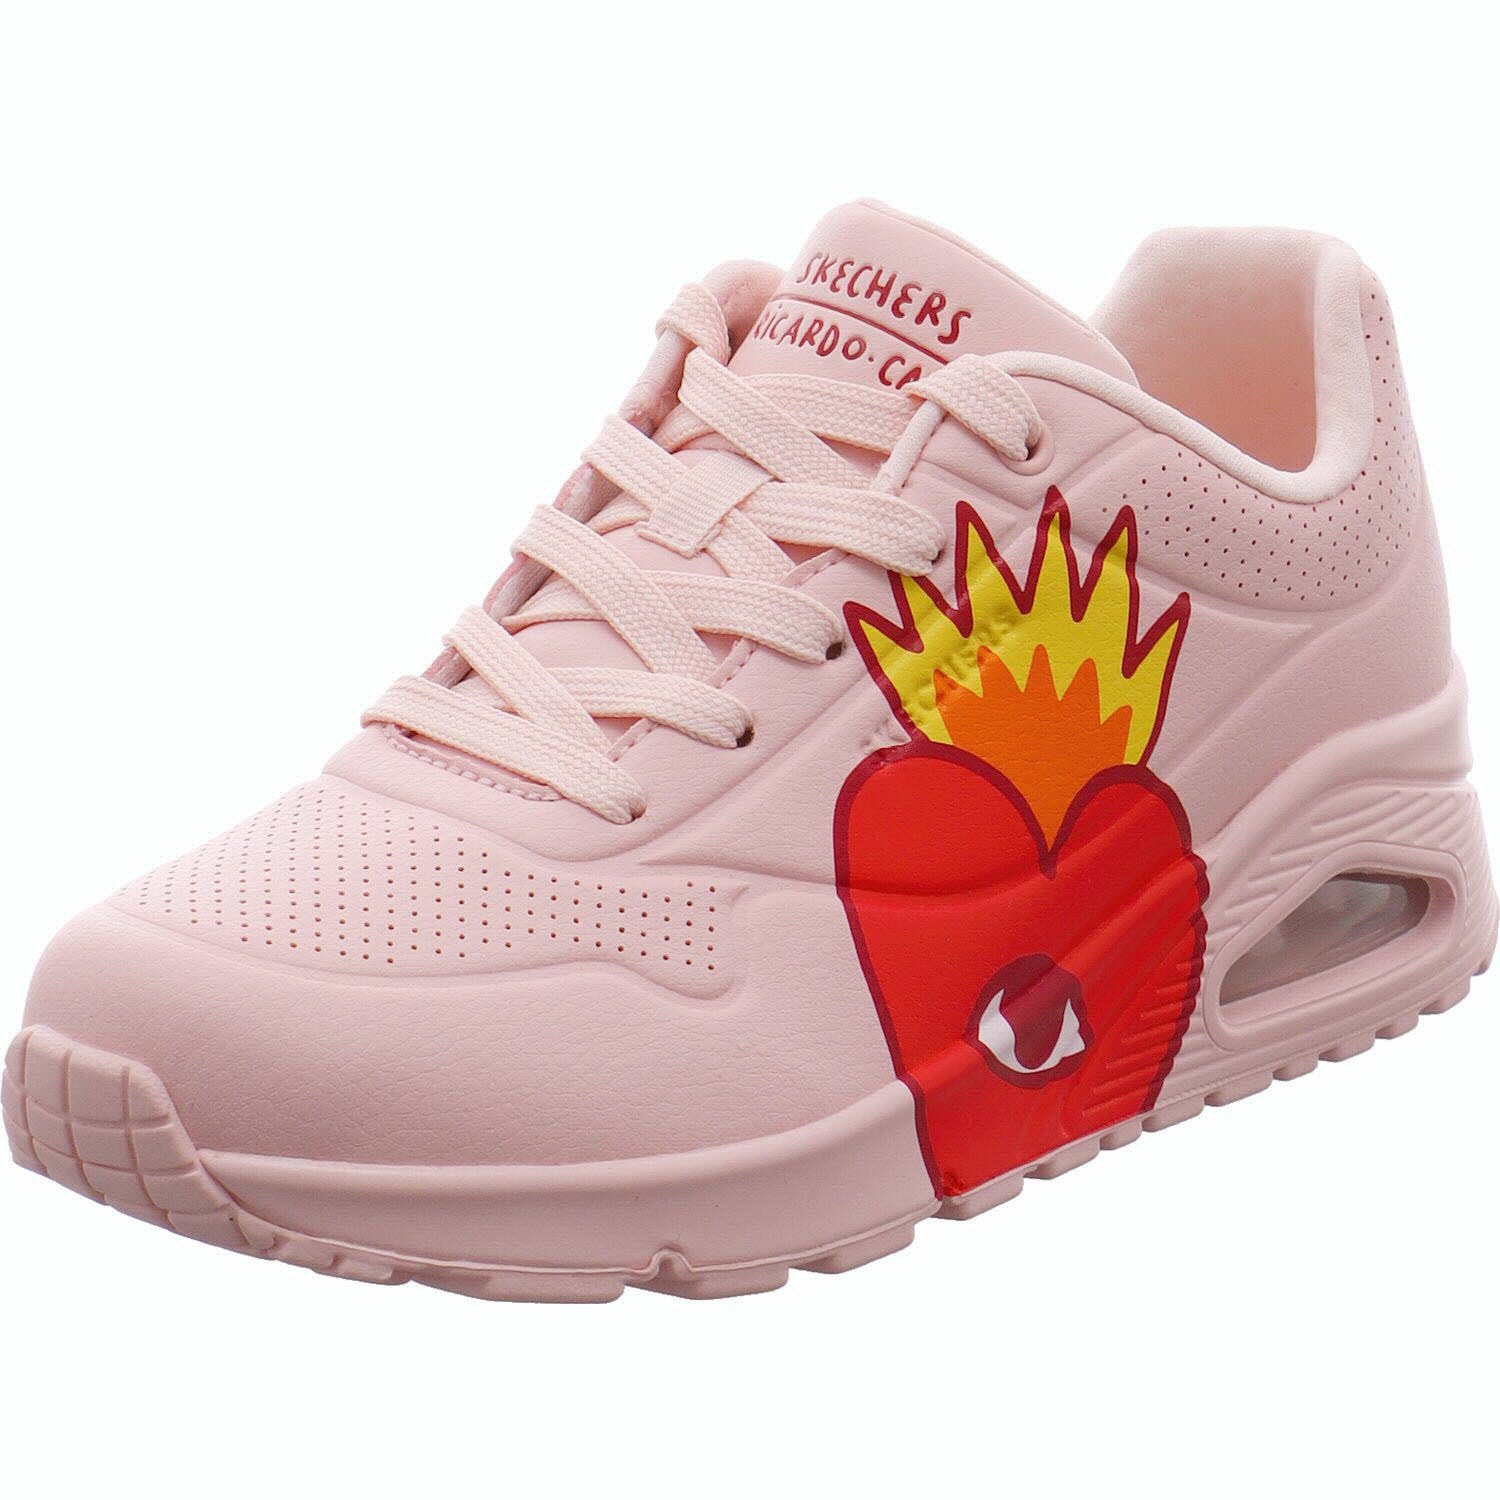 Uno Flaming Sneaker Heart - Skechers